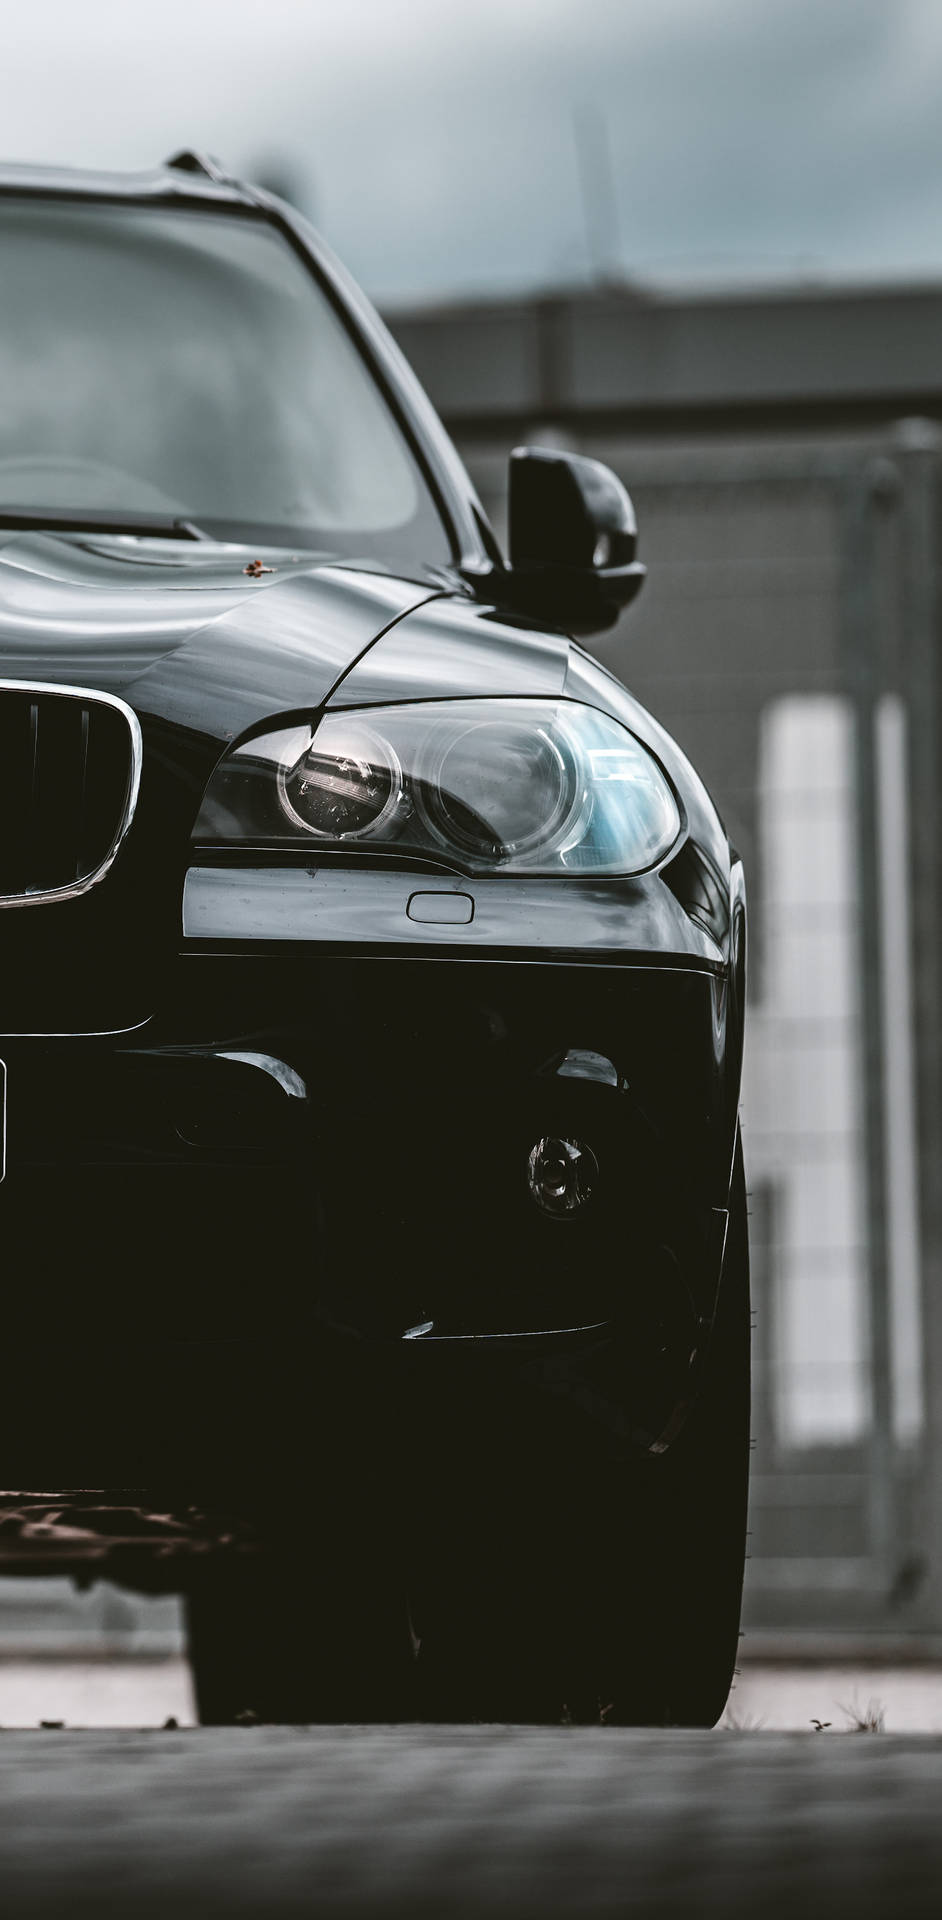 BMW Vision M-Next Concept Car 4K Ultra HD Mobile Wallpaper